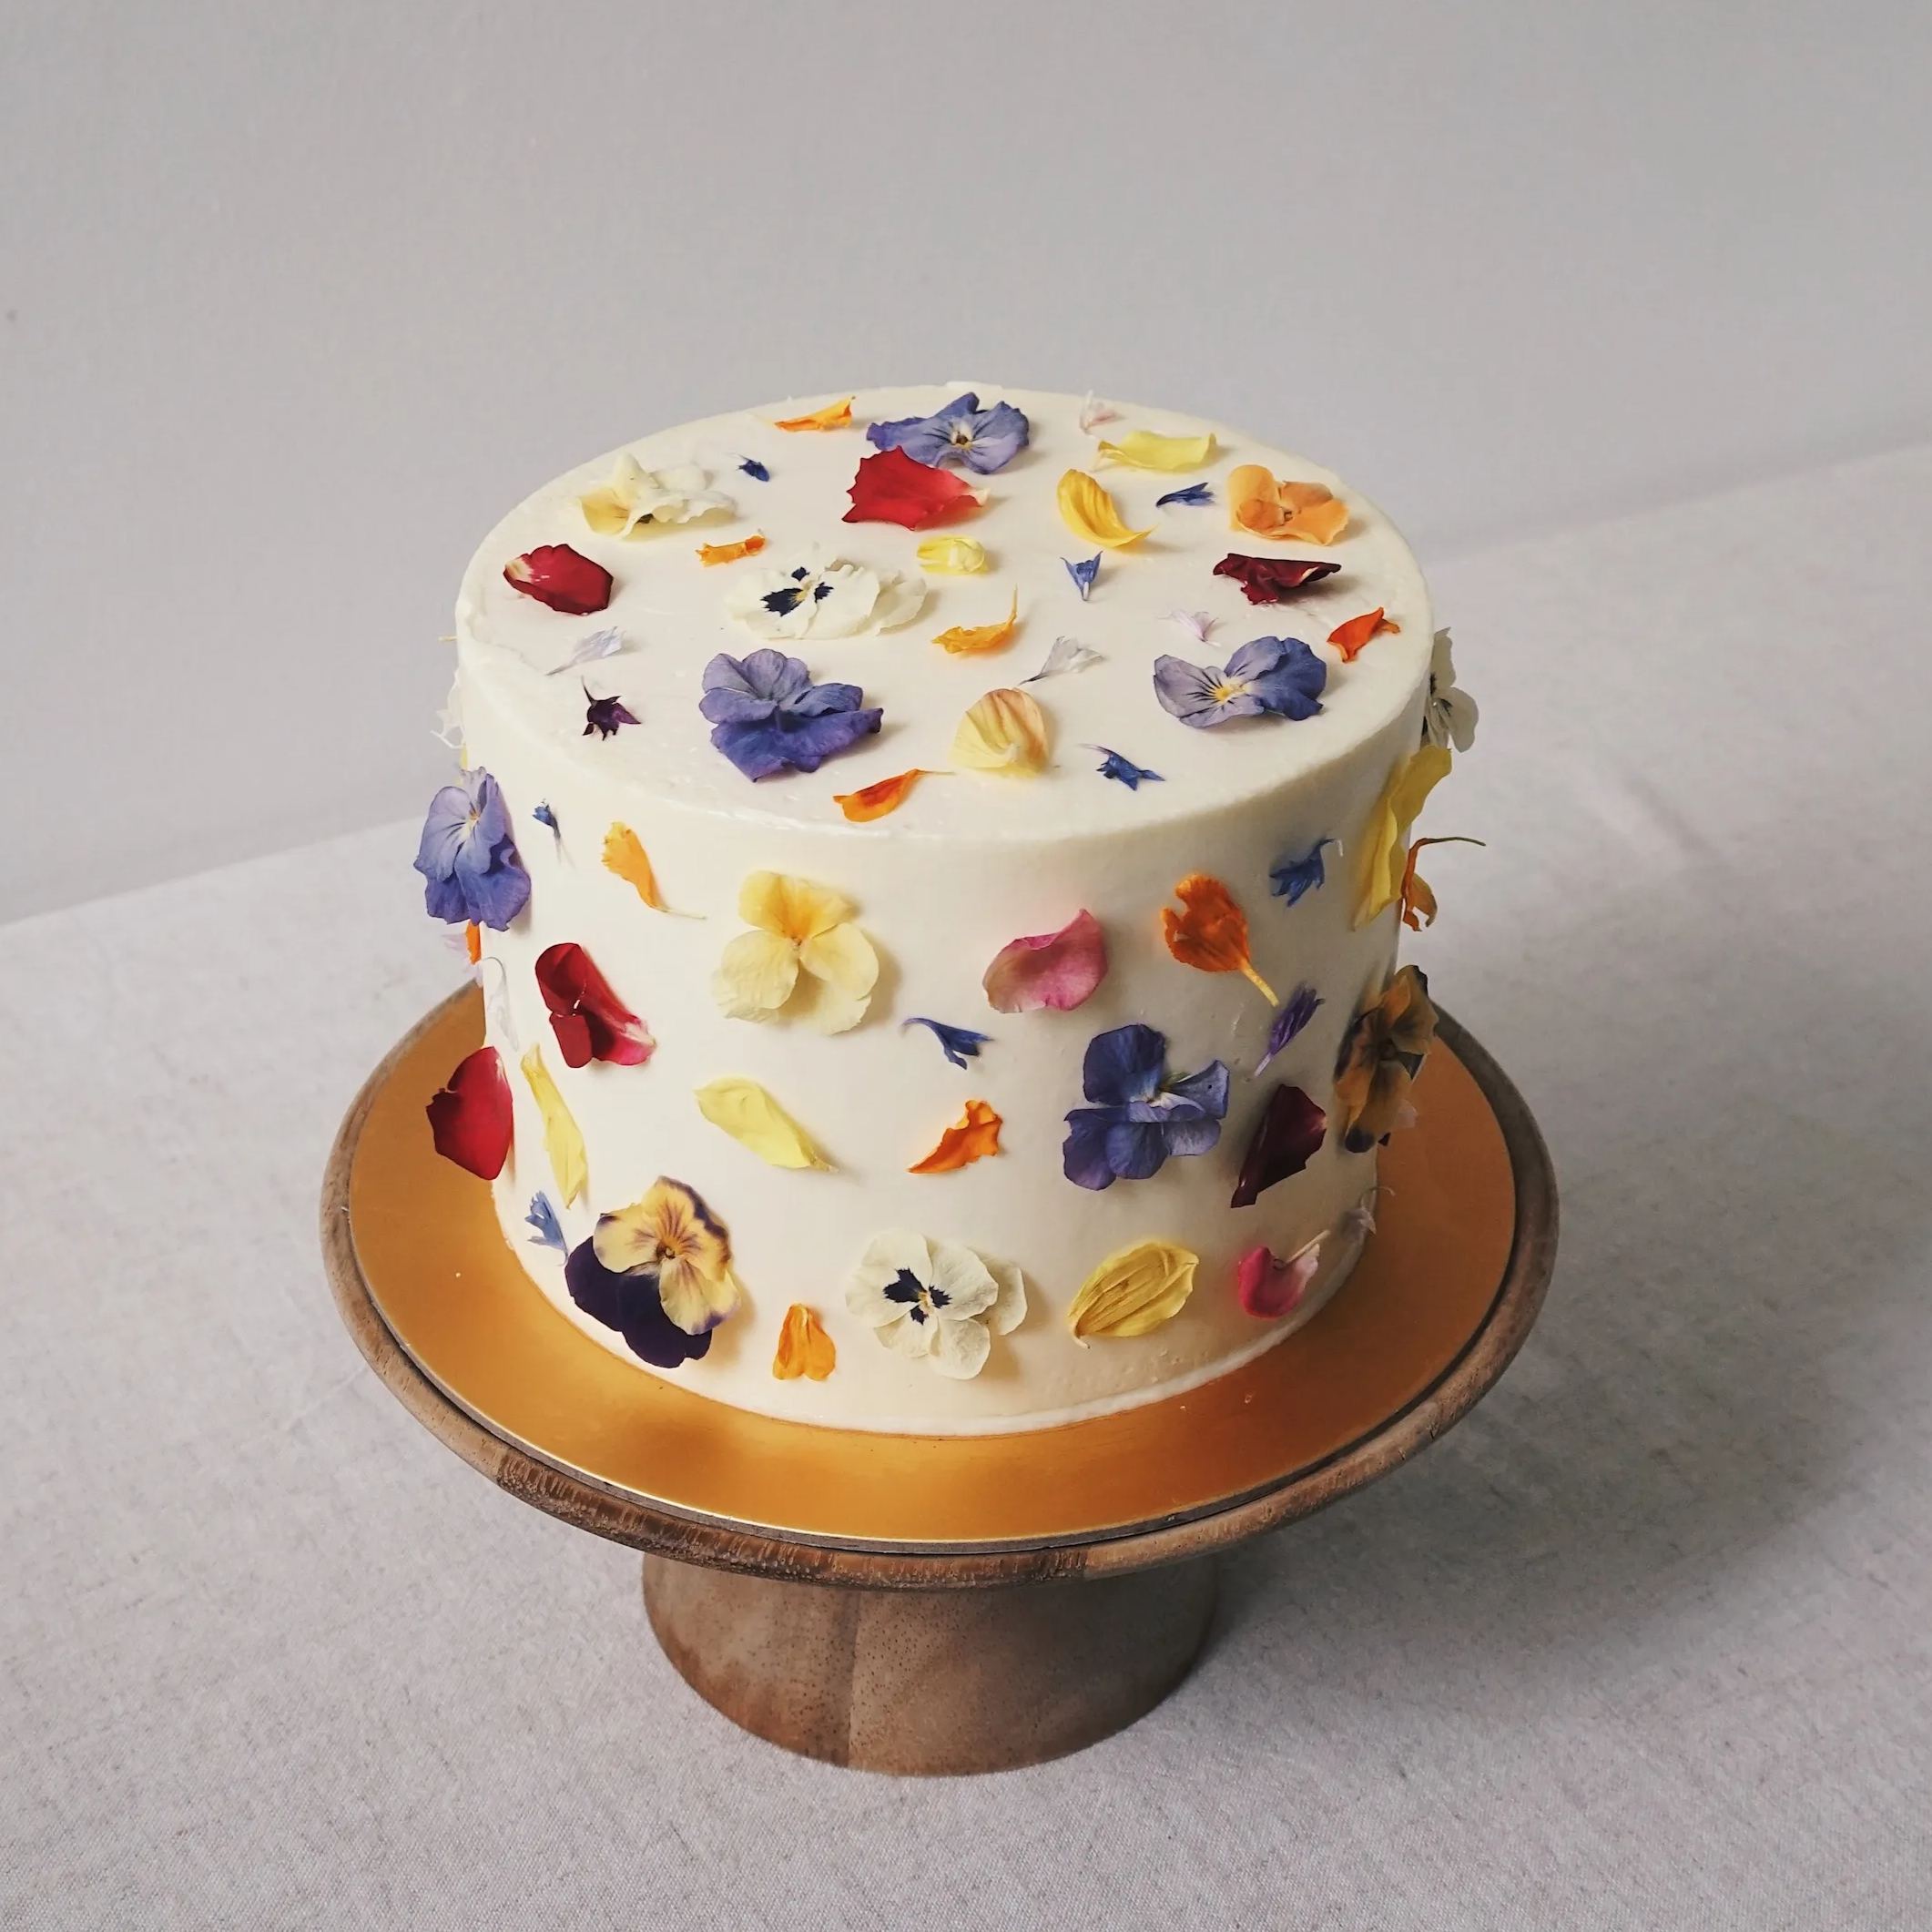 [3 DAYS ADVANCE NOTICE] Flowerfetti Cake